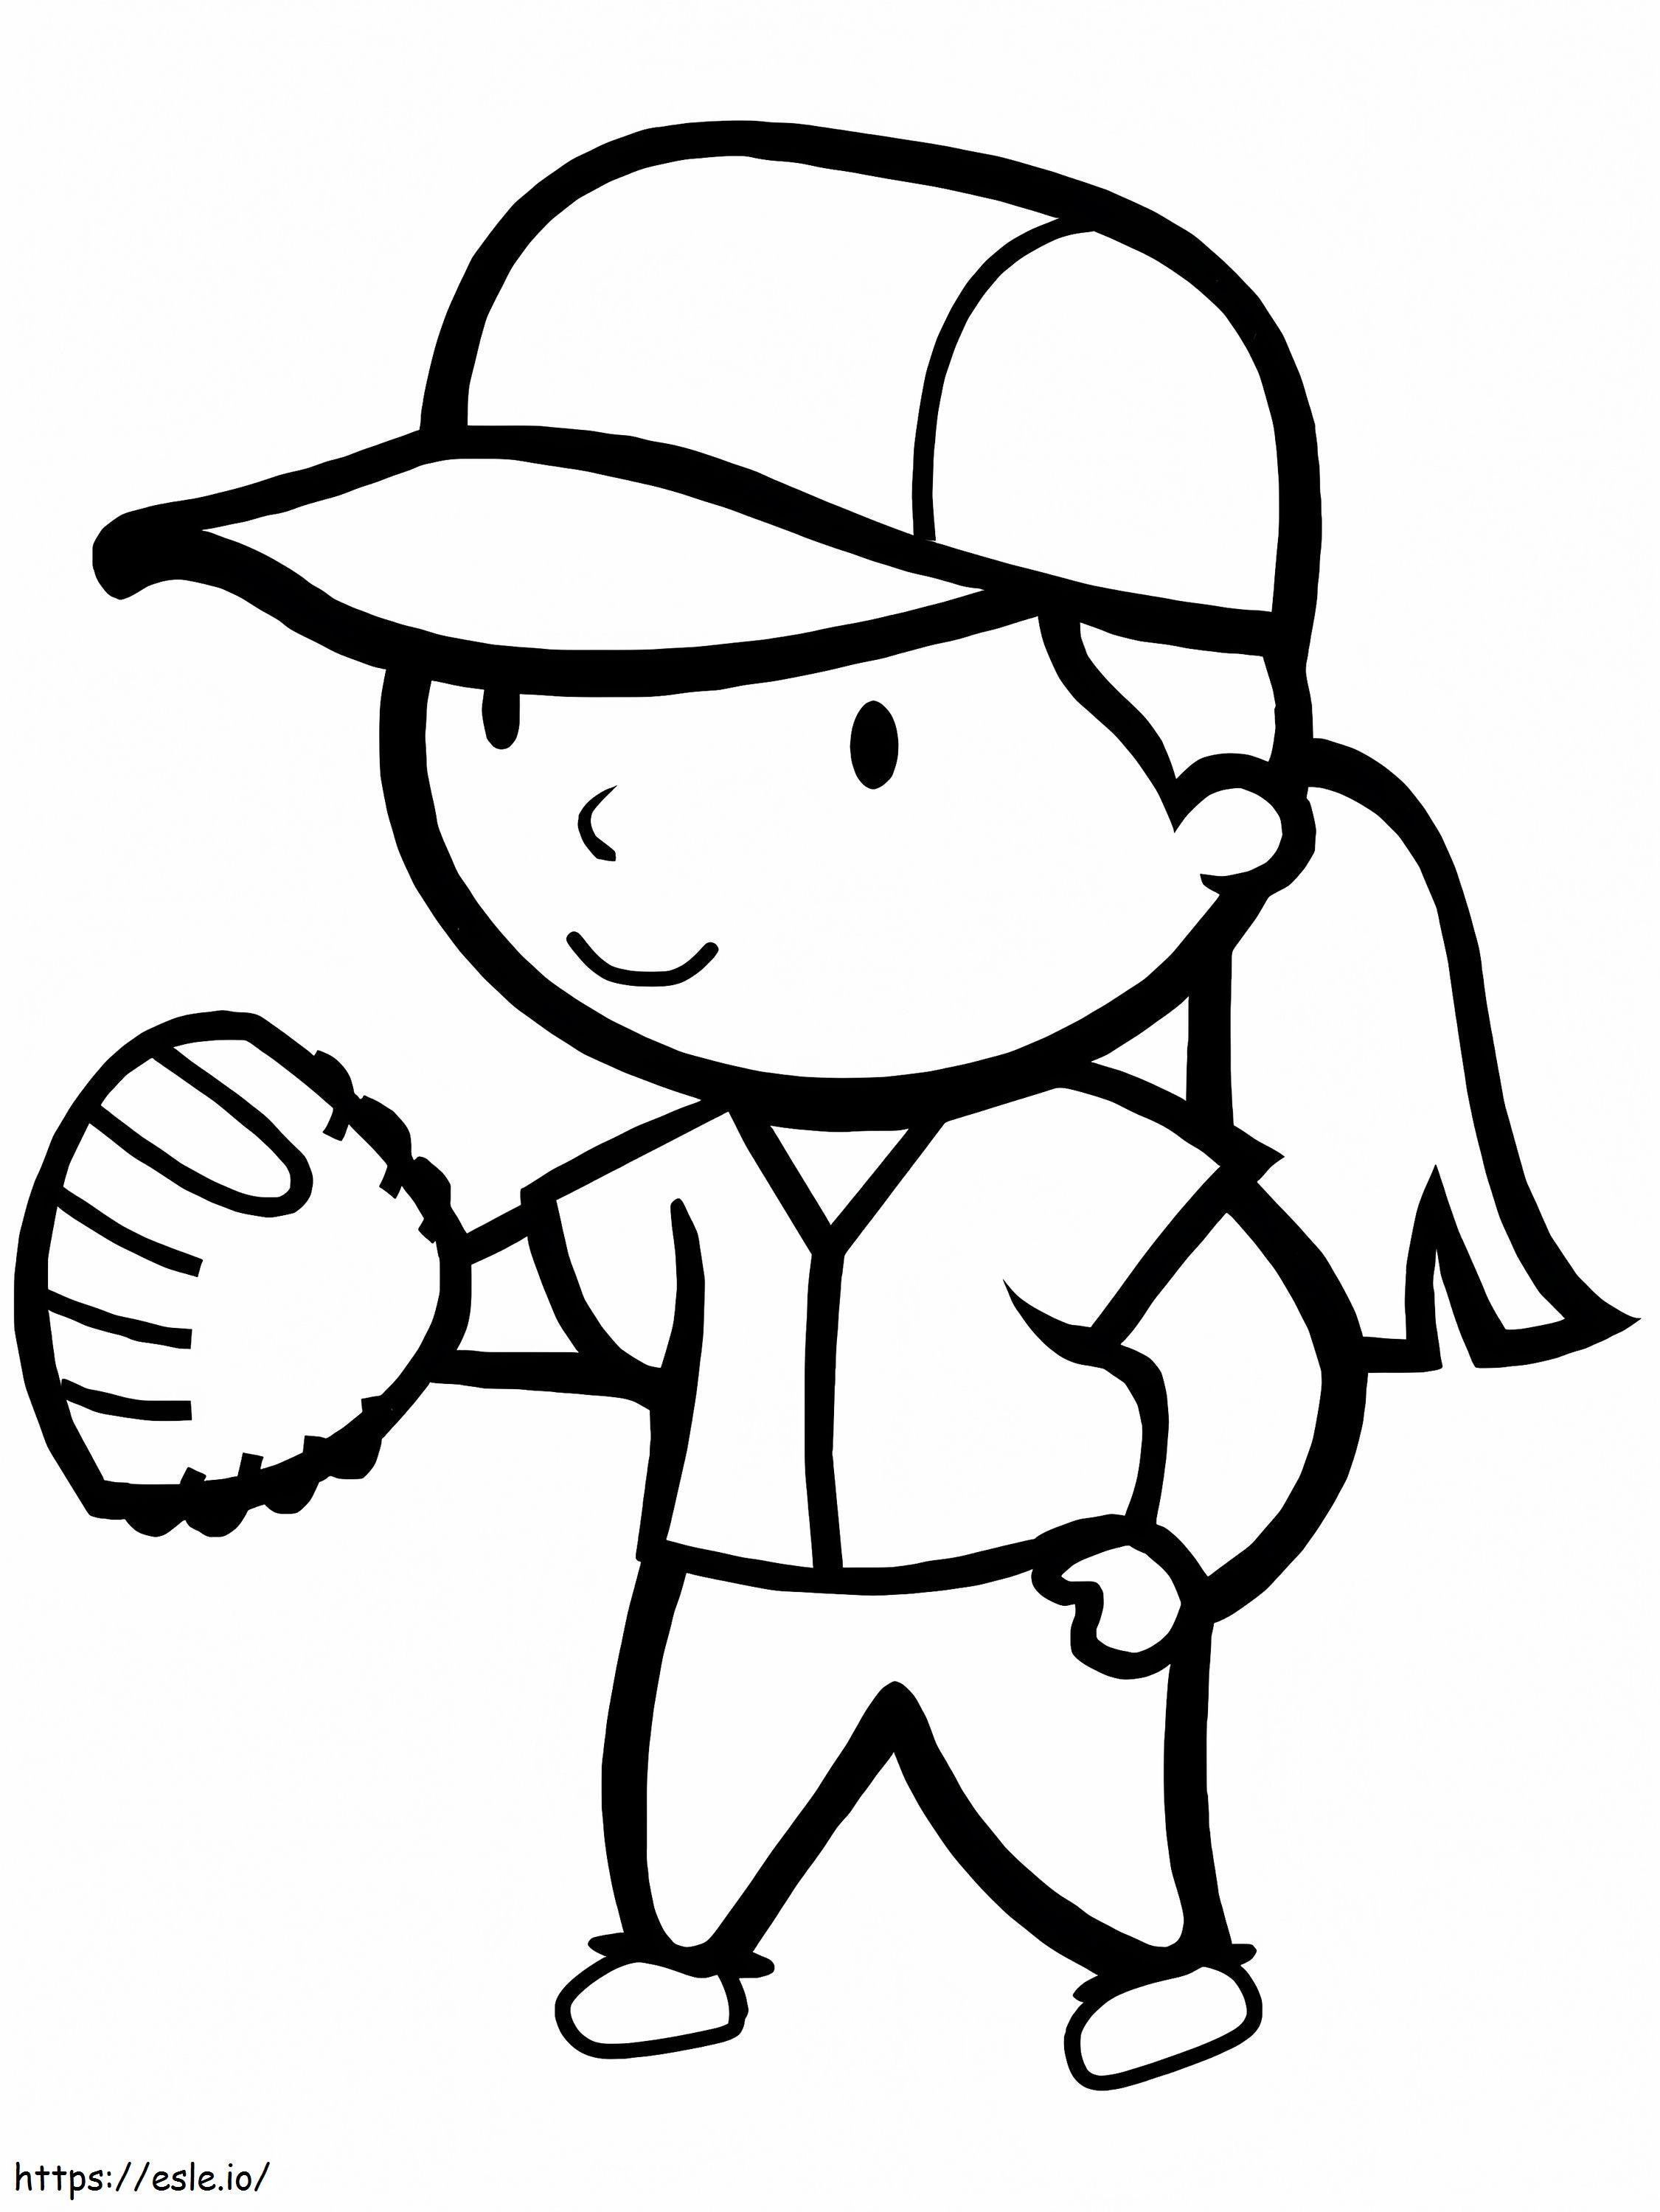 Cartoon Softball Player coloring page